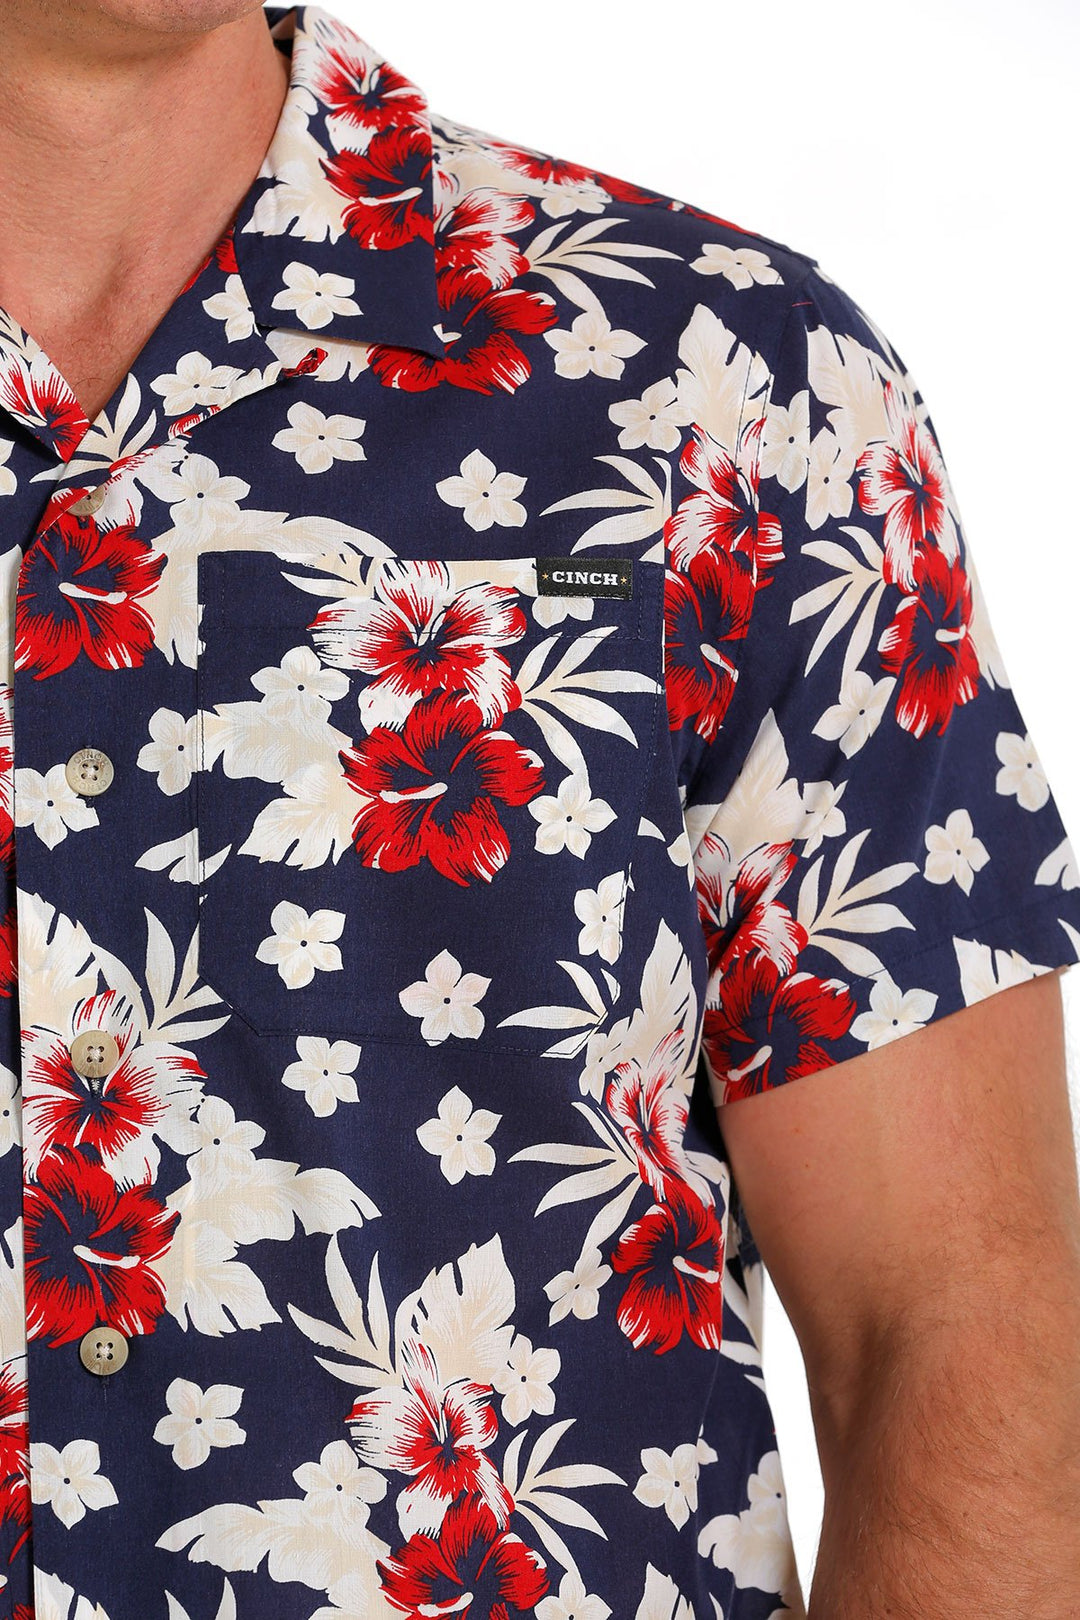 Cinch - Mens Hawaiian Navy Camp Shirt